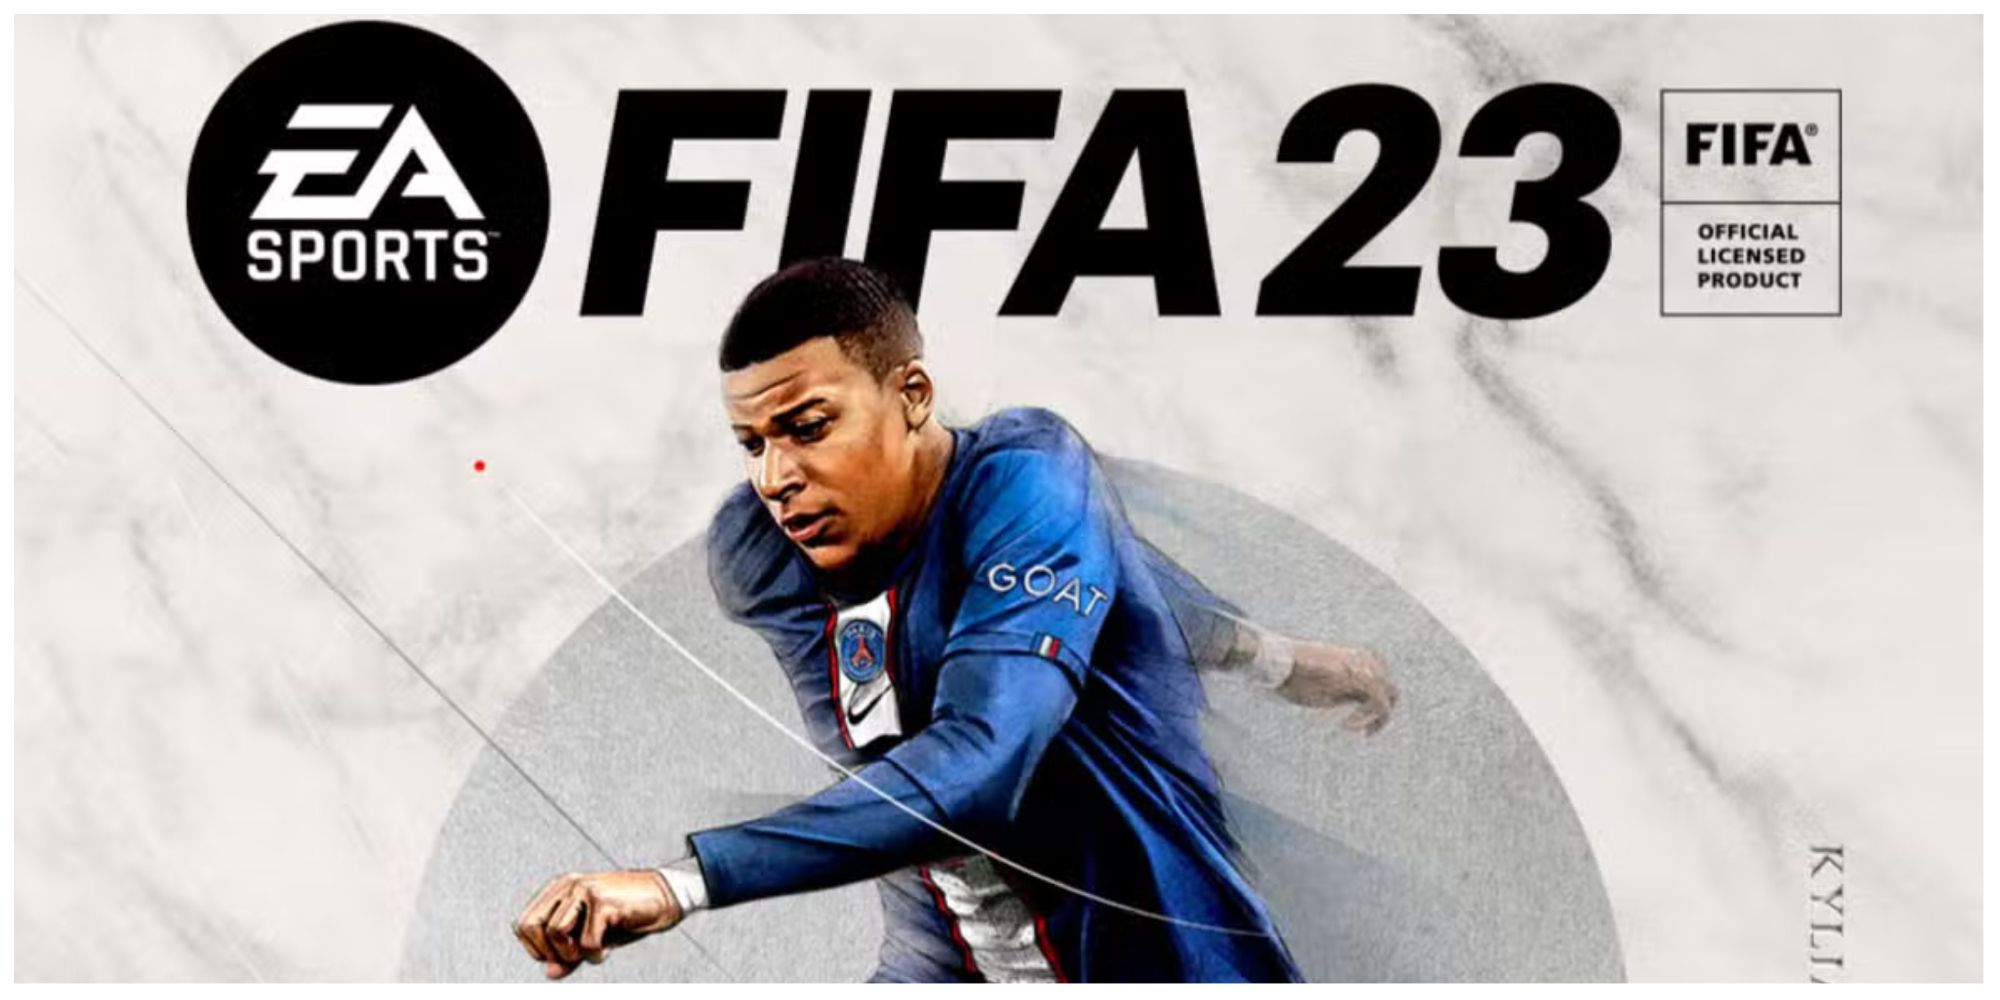 Fifa 23 cover art Mbappe 